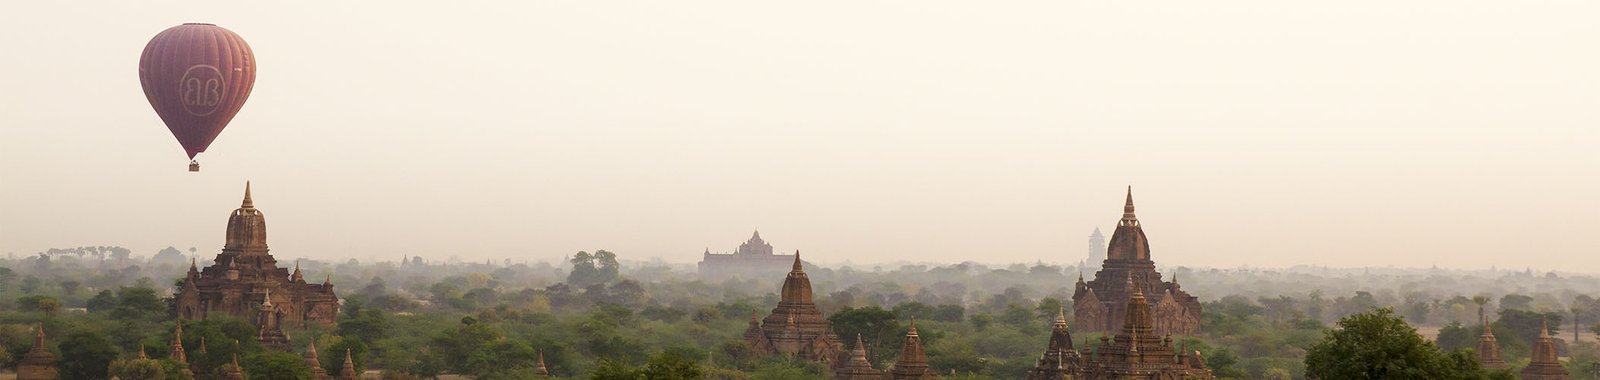 Hot air ballooning above the temples of Bagan